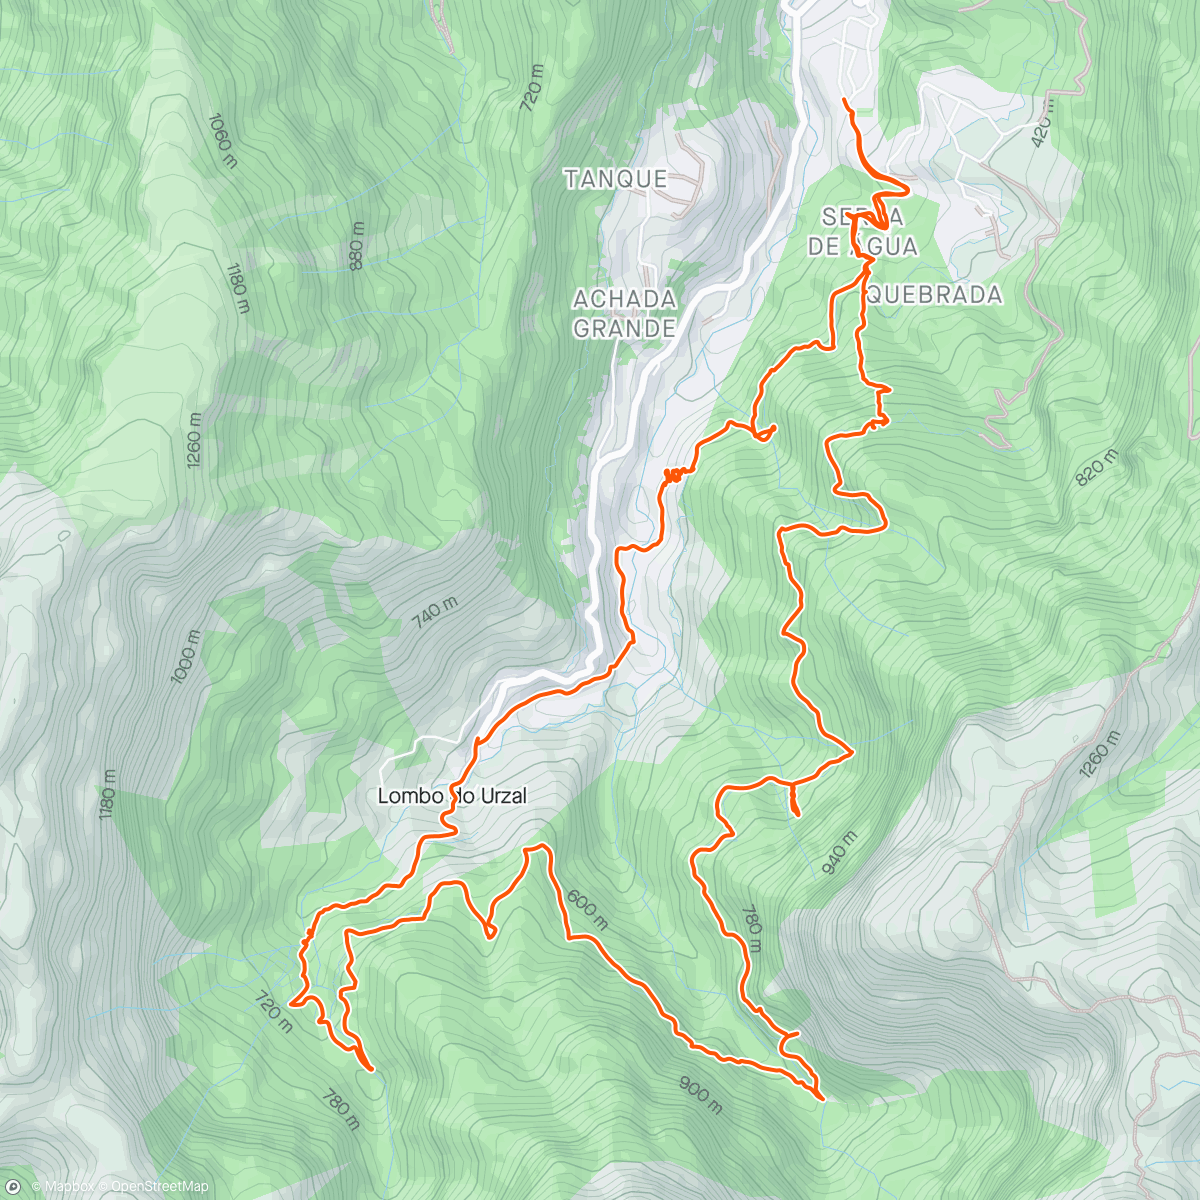 Map of the activity, Tercer día, "Levadas", cascadas y precipicios, radical